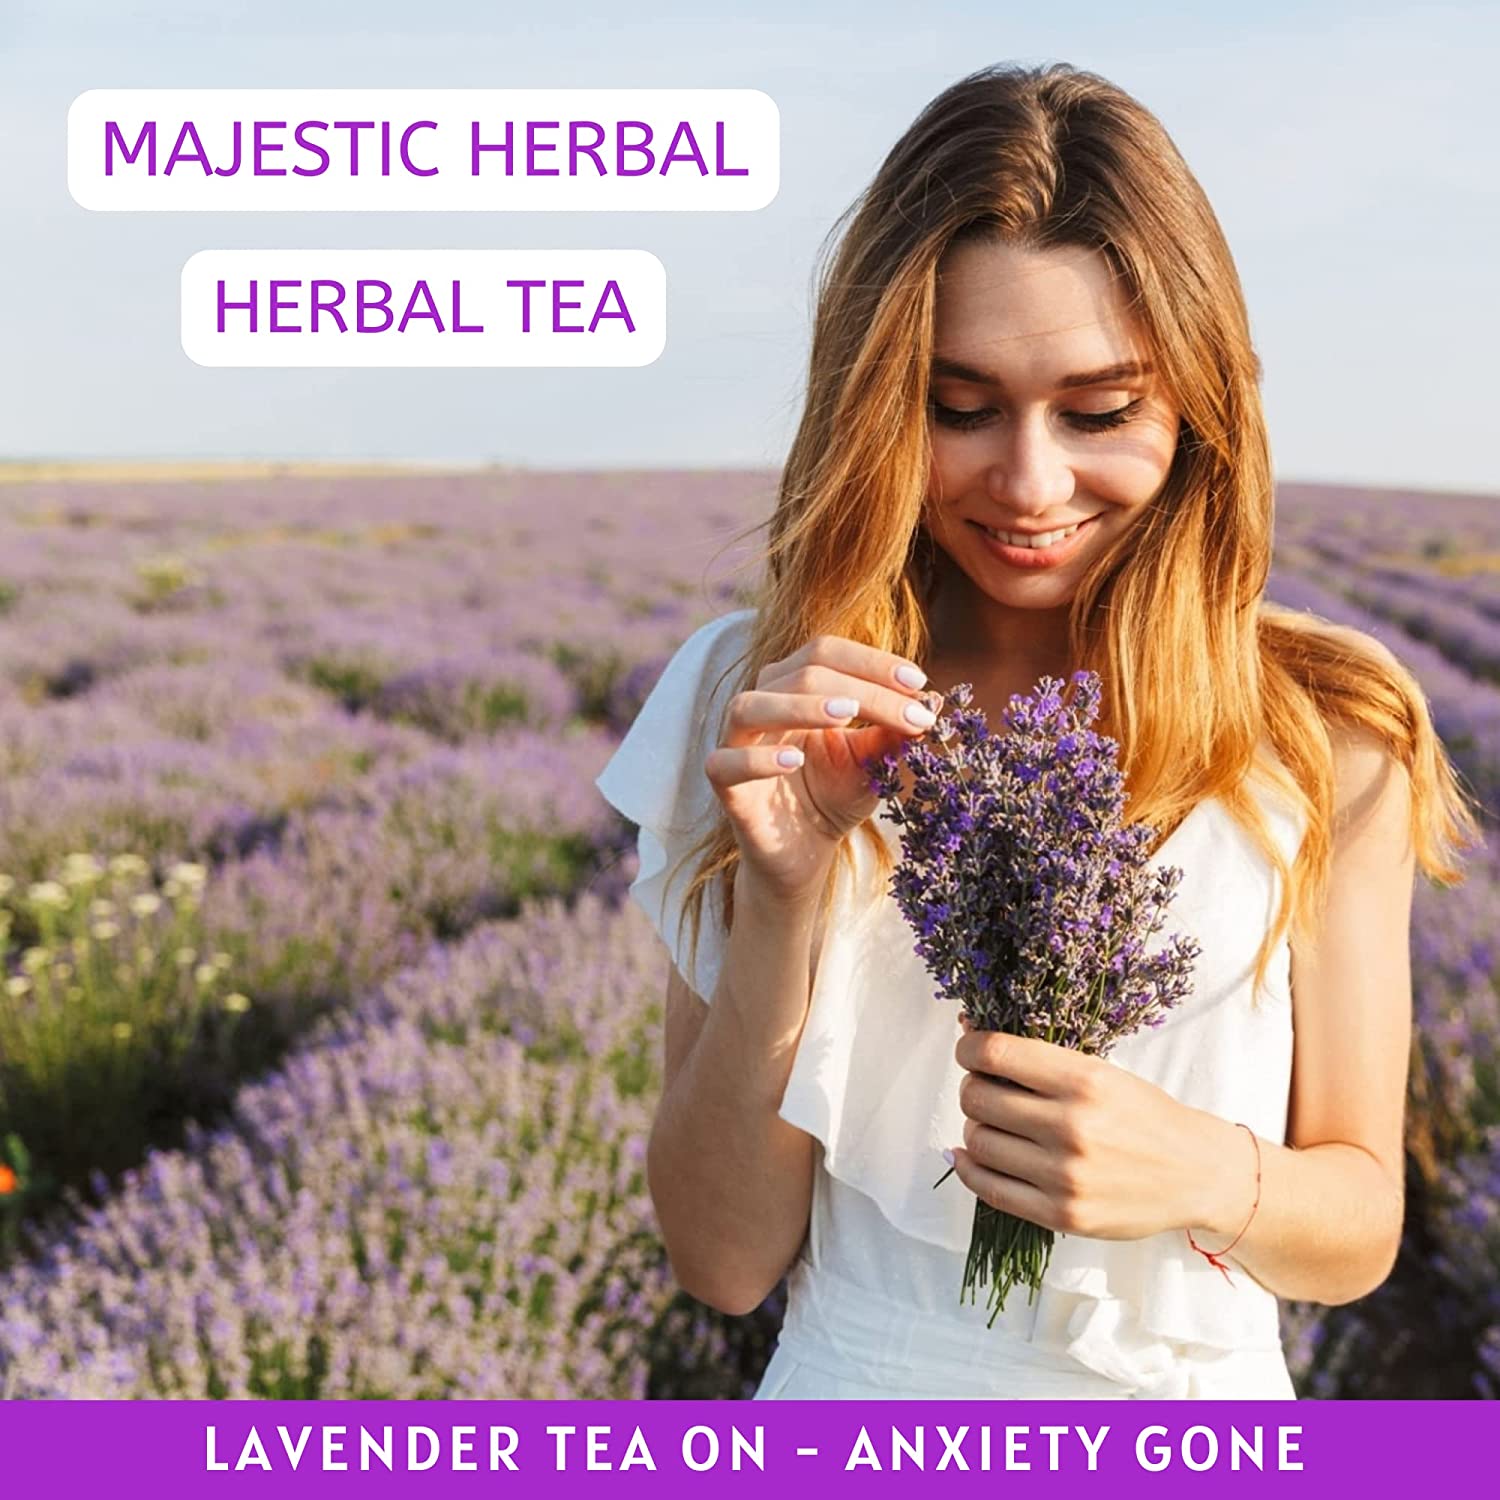 Havintha Natural Lavender Tea | Herbal Tea, Iced Tea - Caffeine Free | Organic Lavender Flower Tea - 1.7 oz | 0.1 lb | 50 gm (50 Cups)